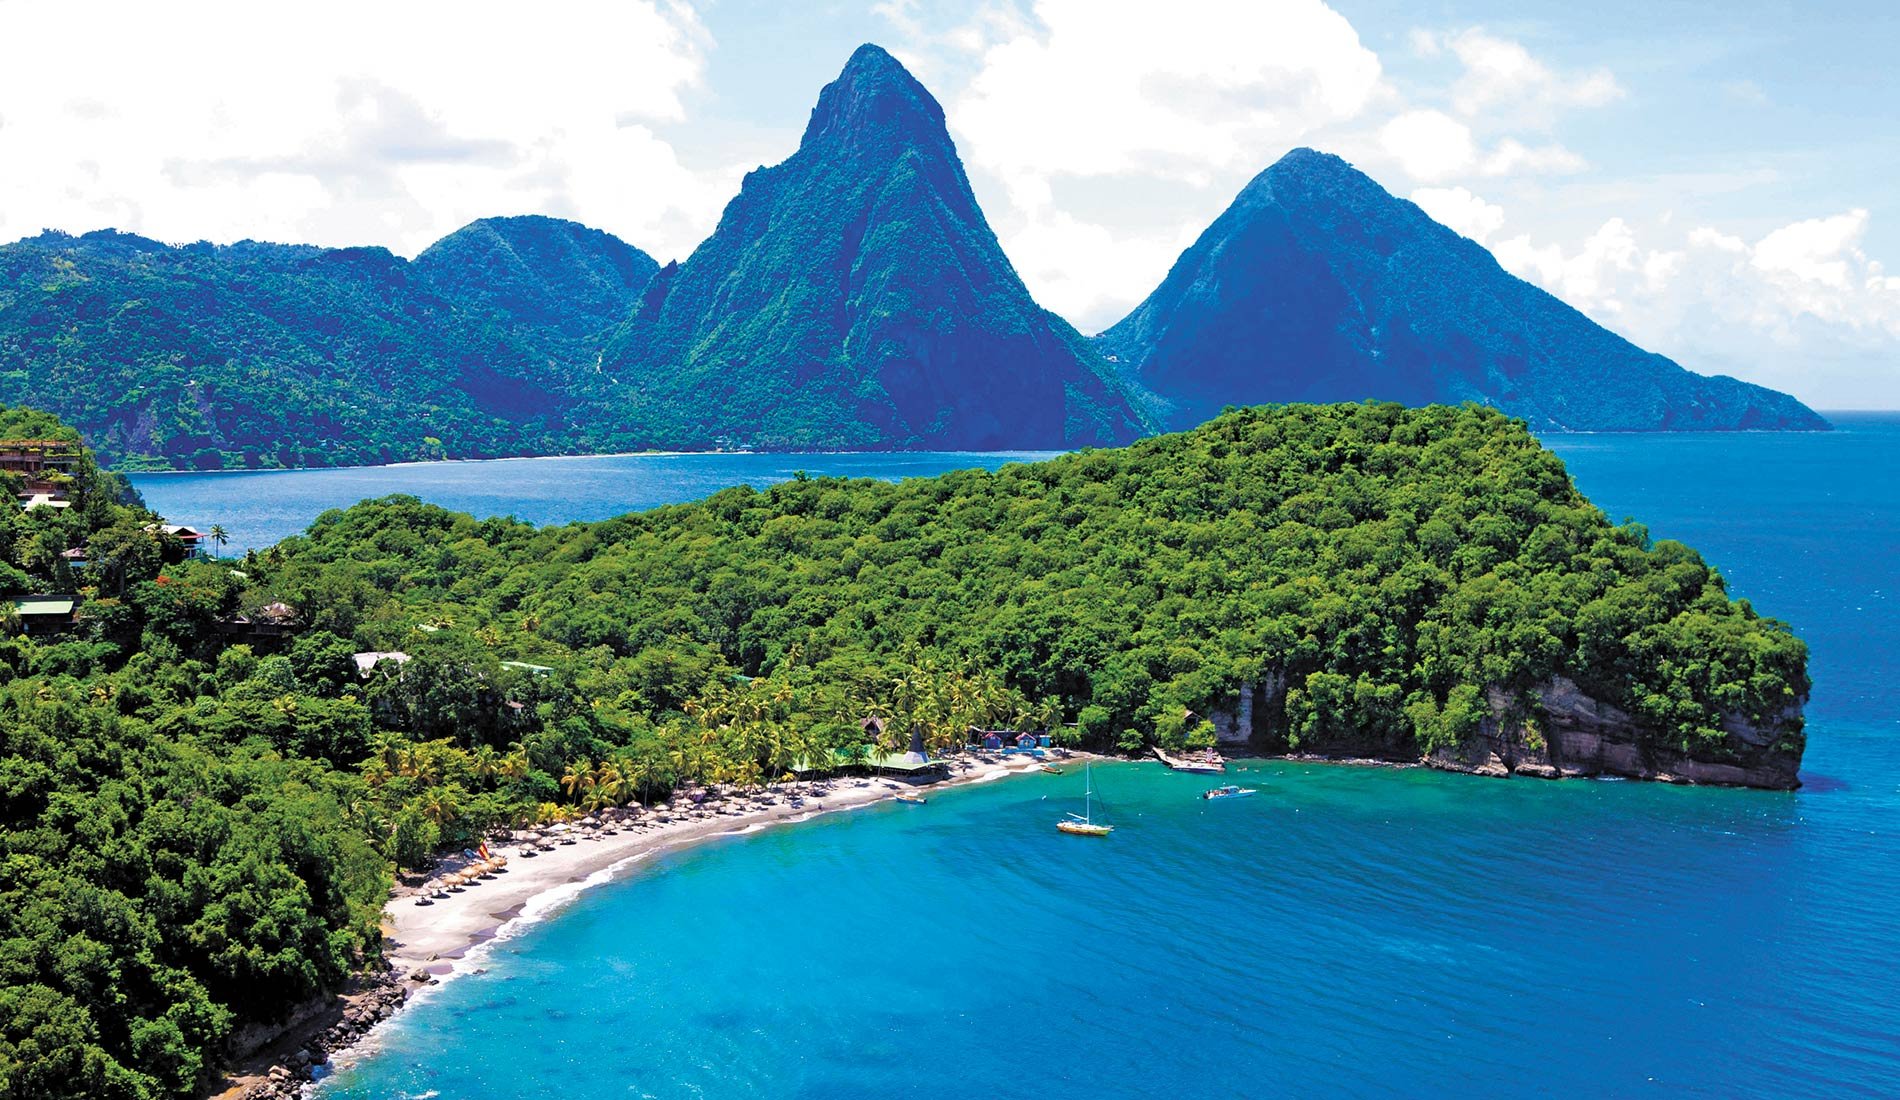 Luxury and romantic resort Anse Chastanet Resort 5 stars St Lucia Caribbean island paradisiac beach